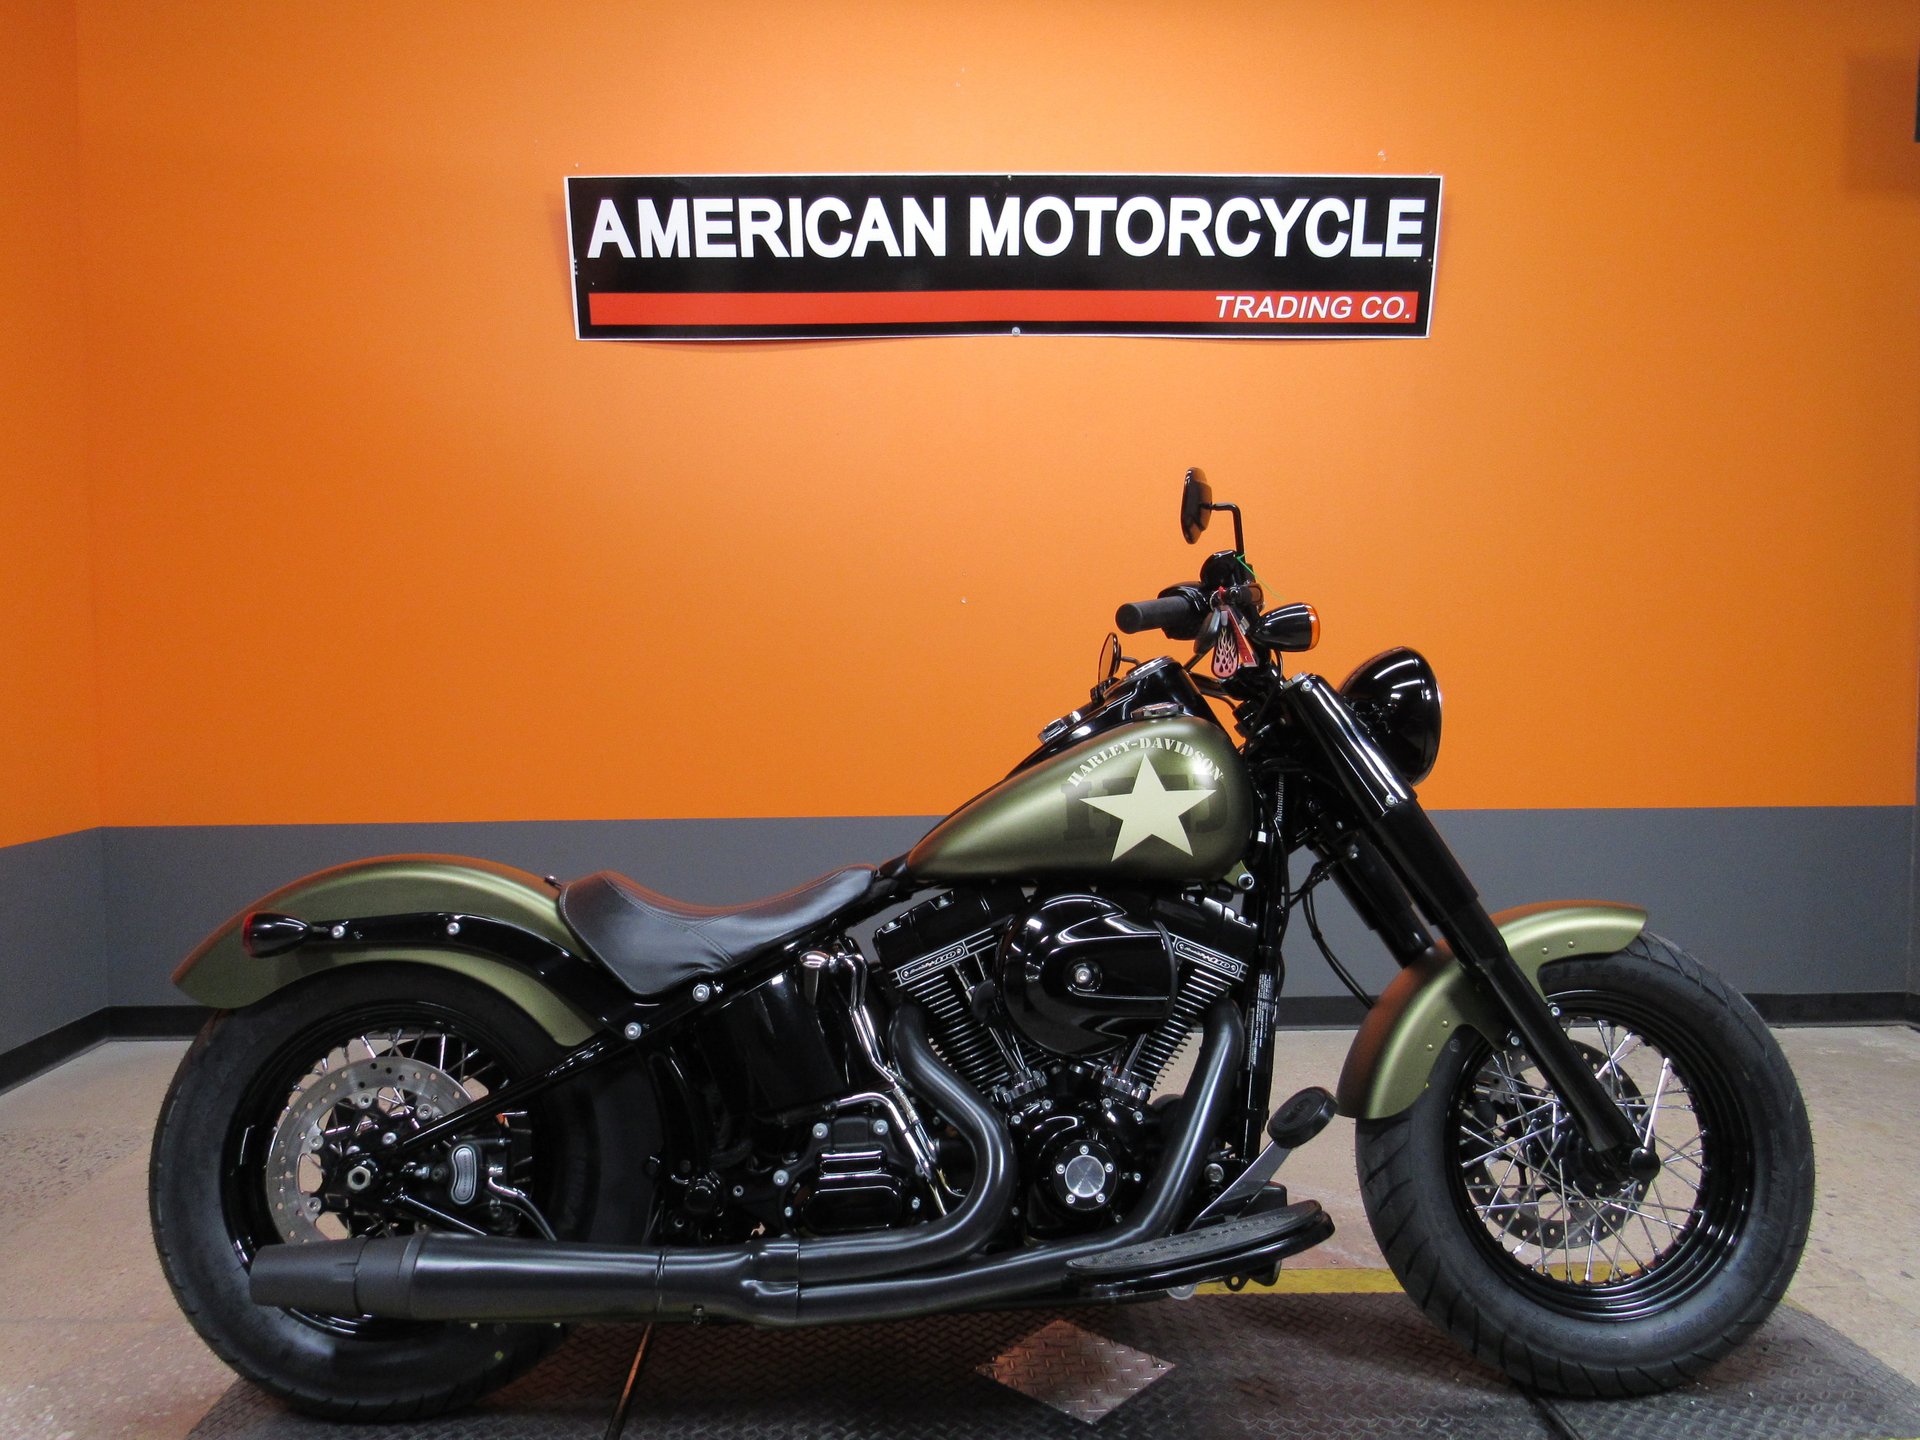 2016 Harley-Davidson Softail Slim | American Motorcycle Trading Company -  Used Harley Davidson Motorcycles